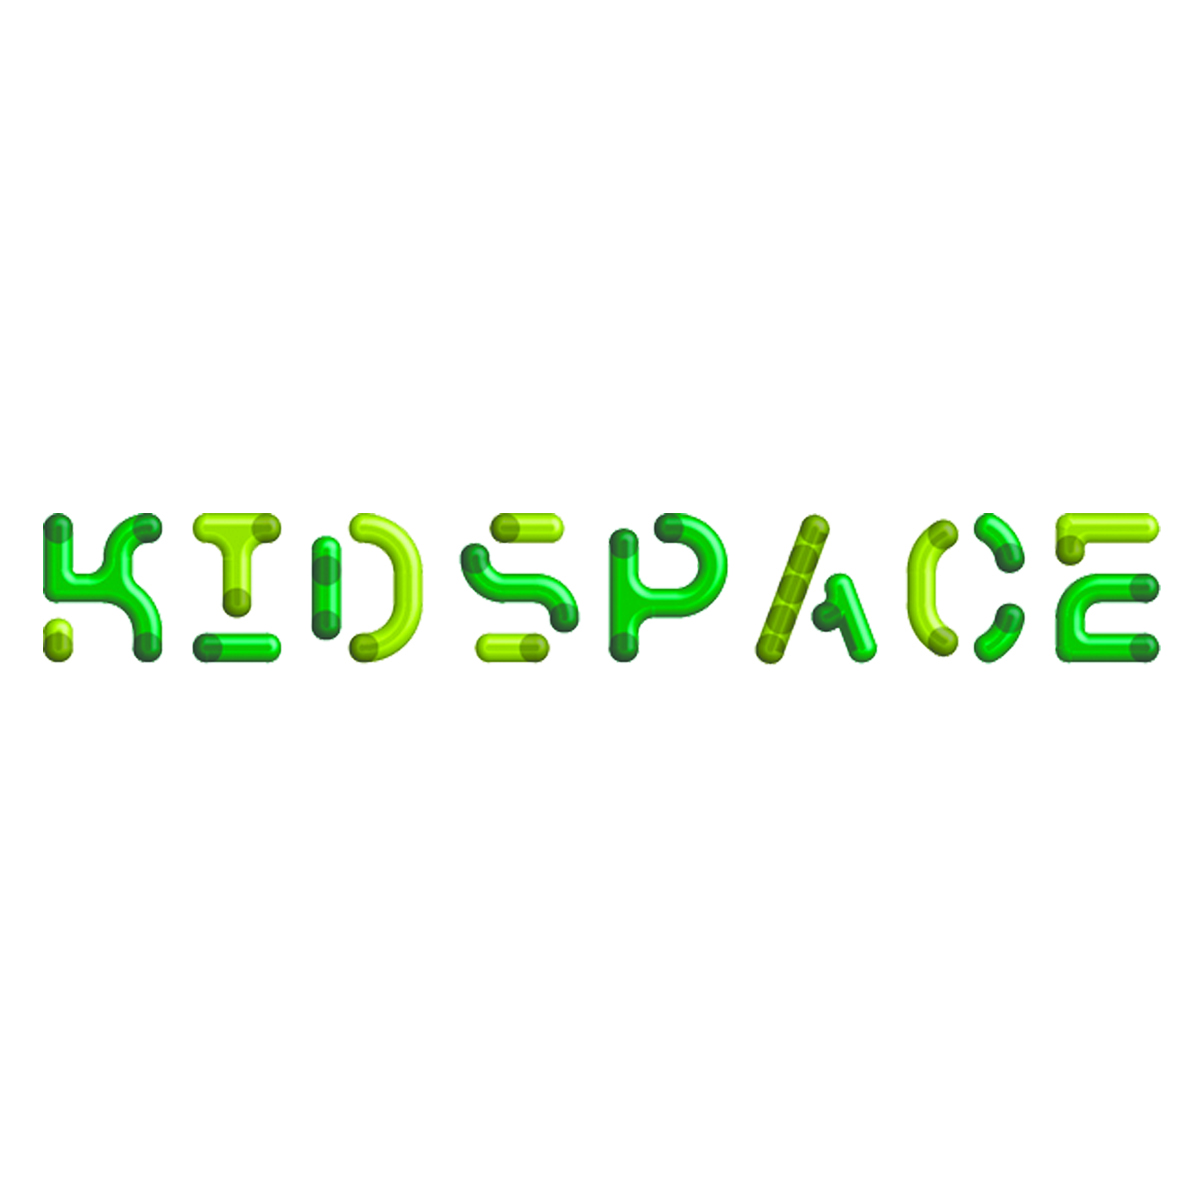 Kidspace